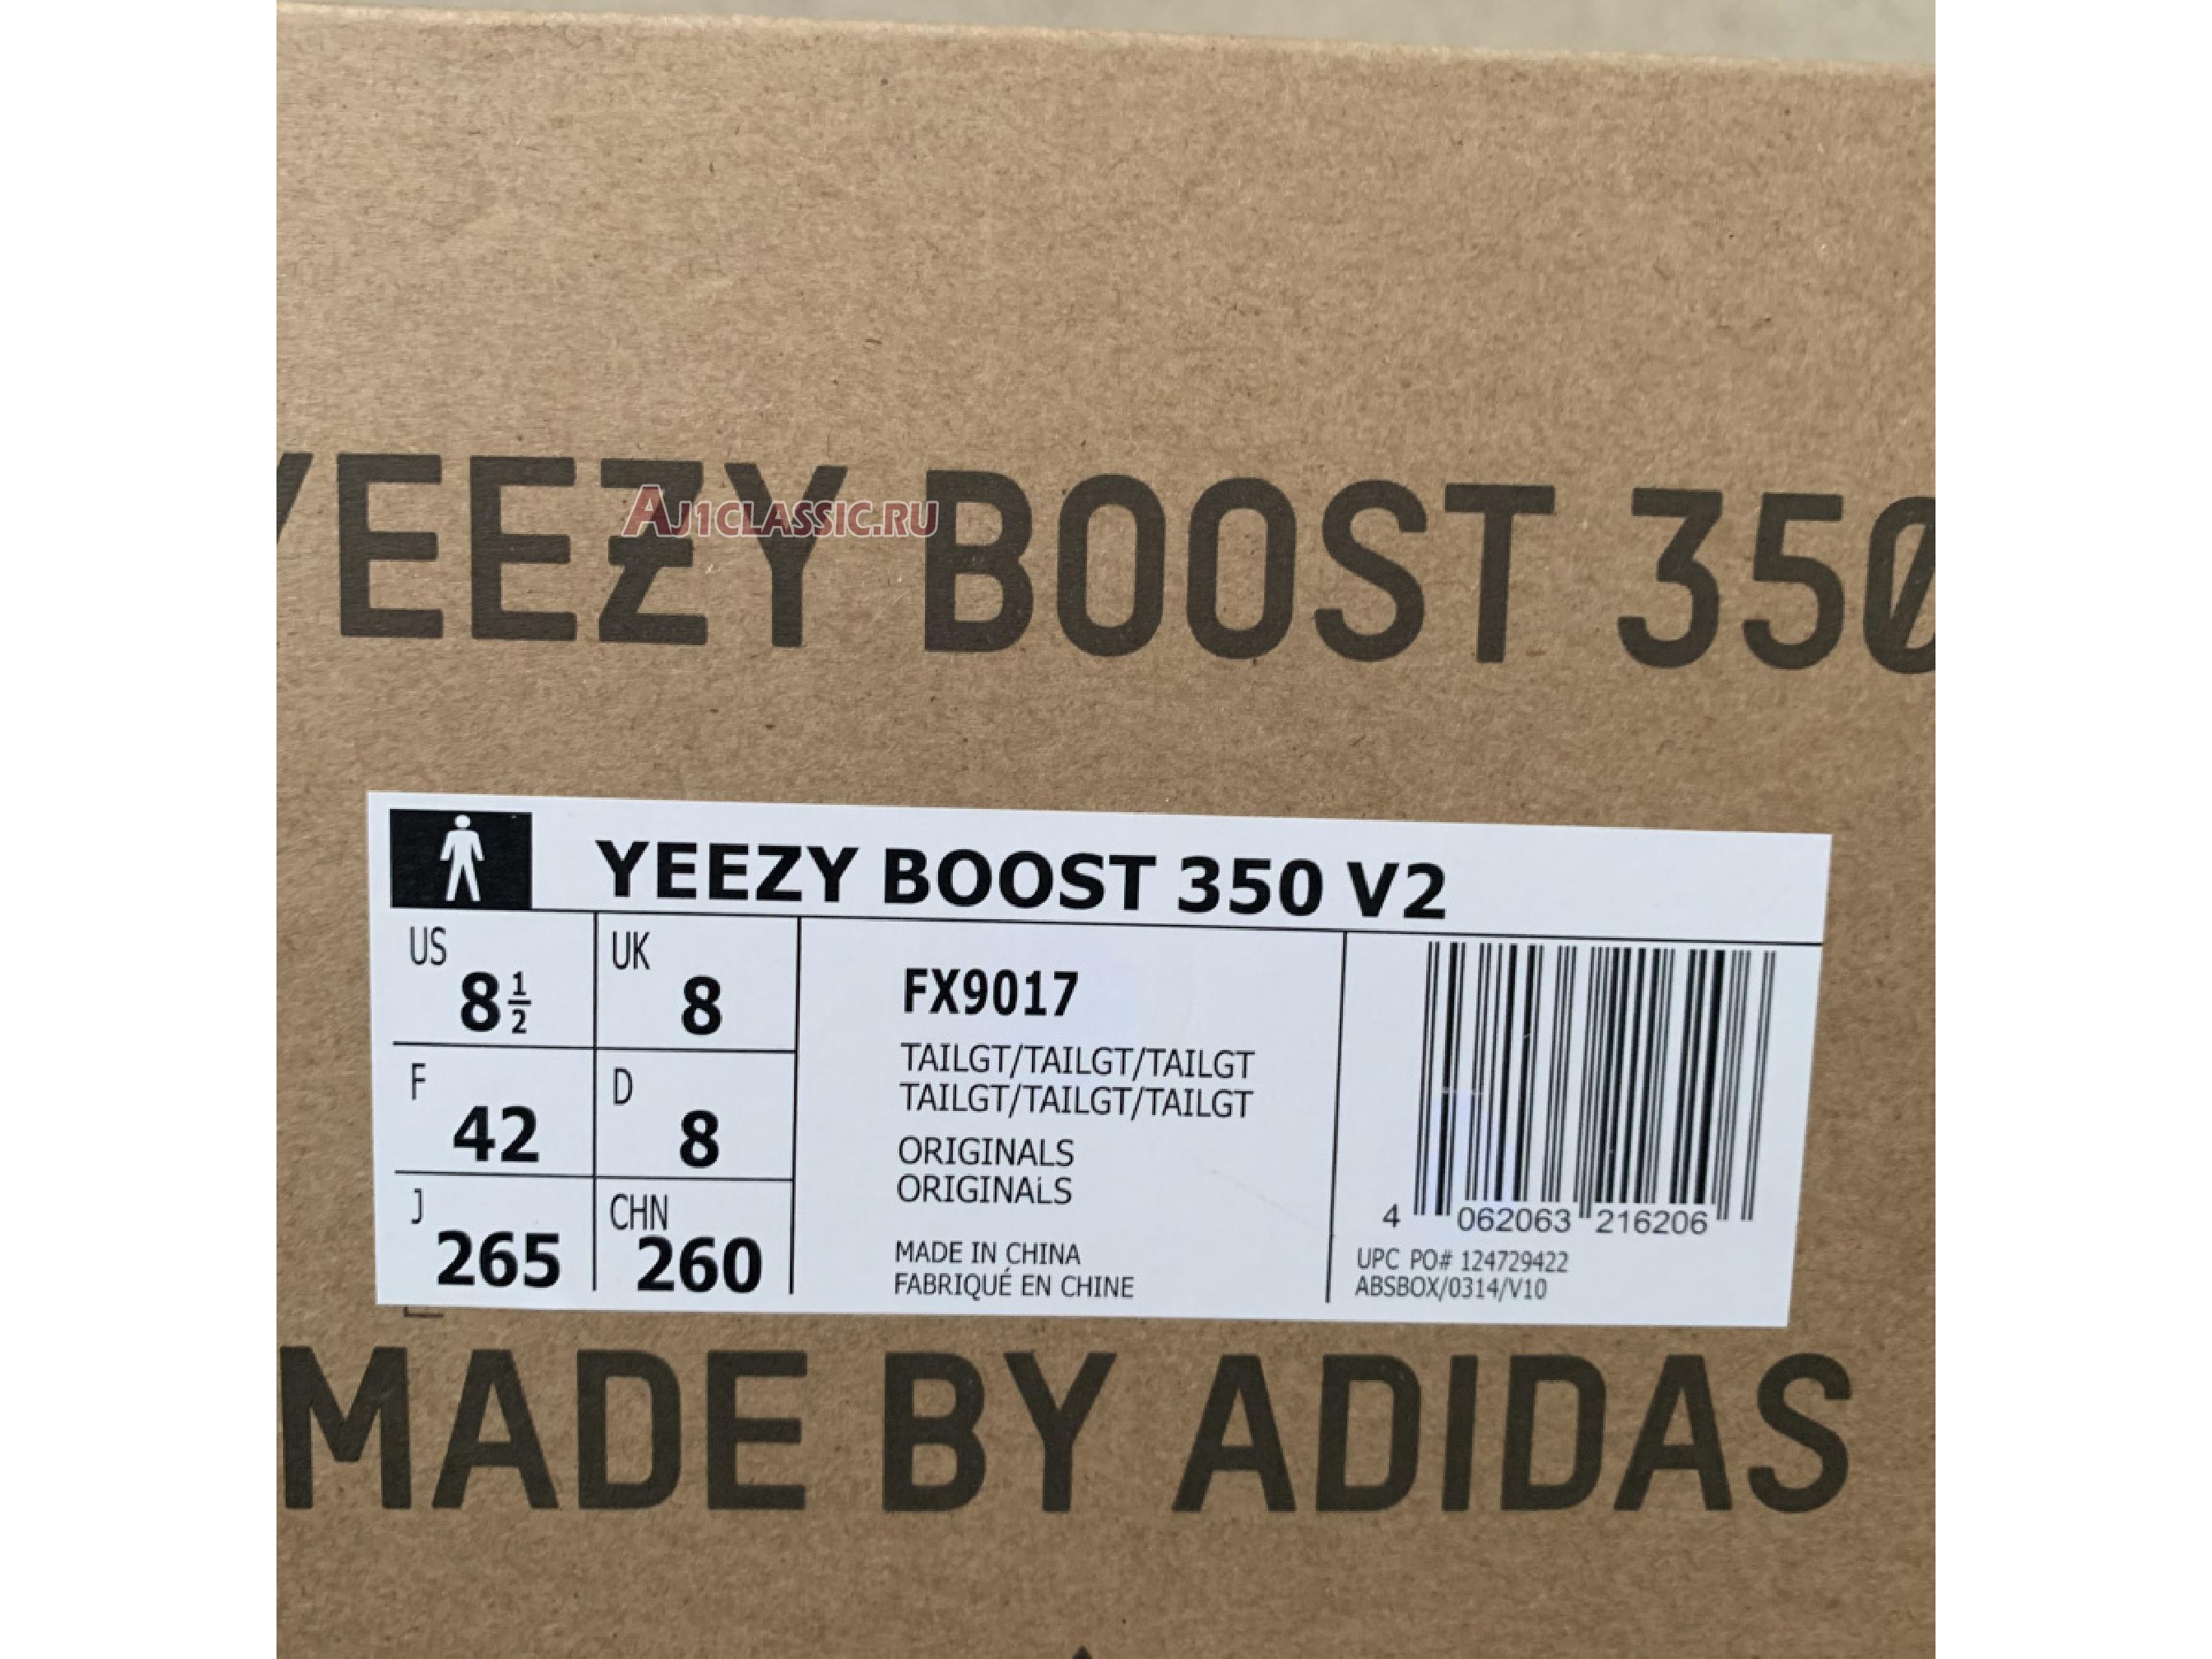 Adidas Yeezy Boost 350 V2 "Tail Light" FX9017